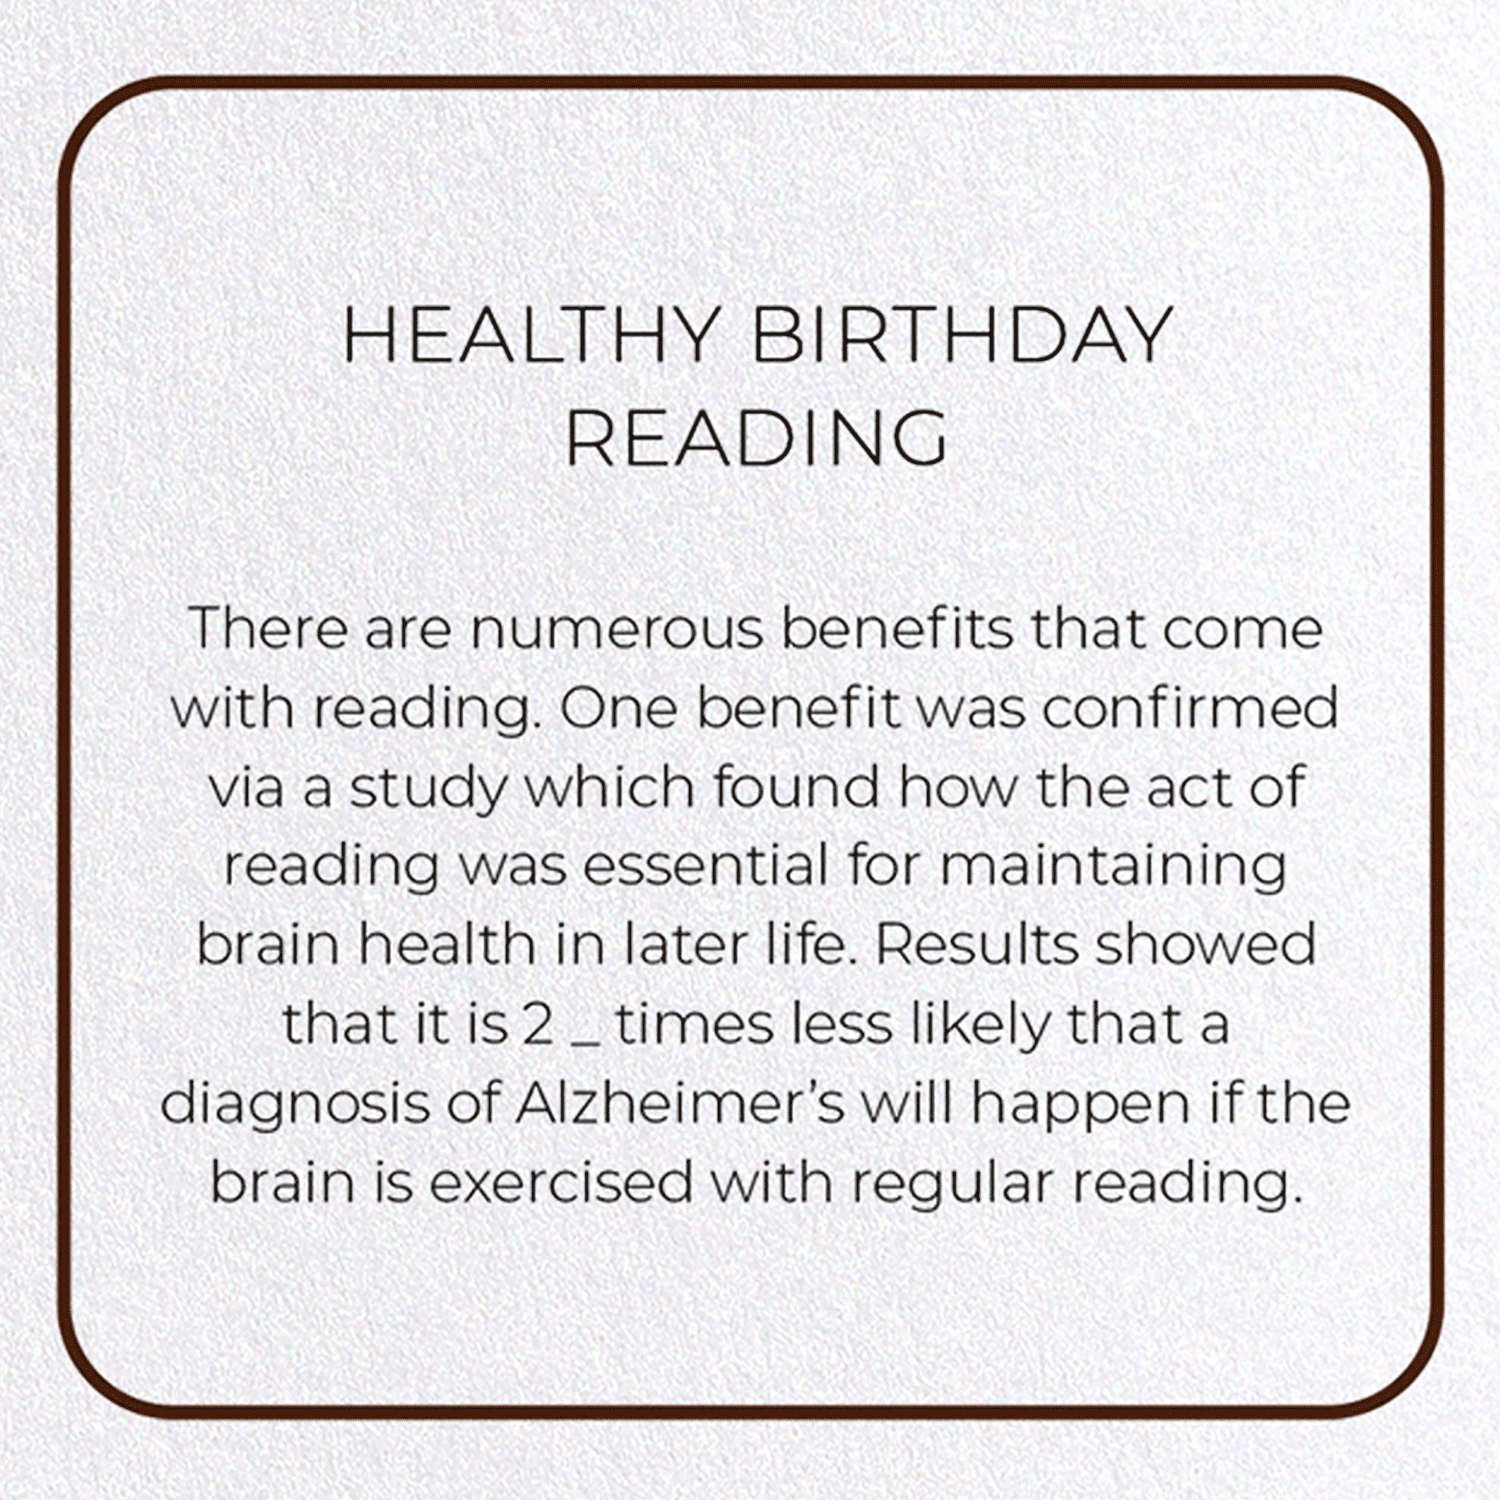 HEALTHY BIRTHDAY READING